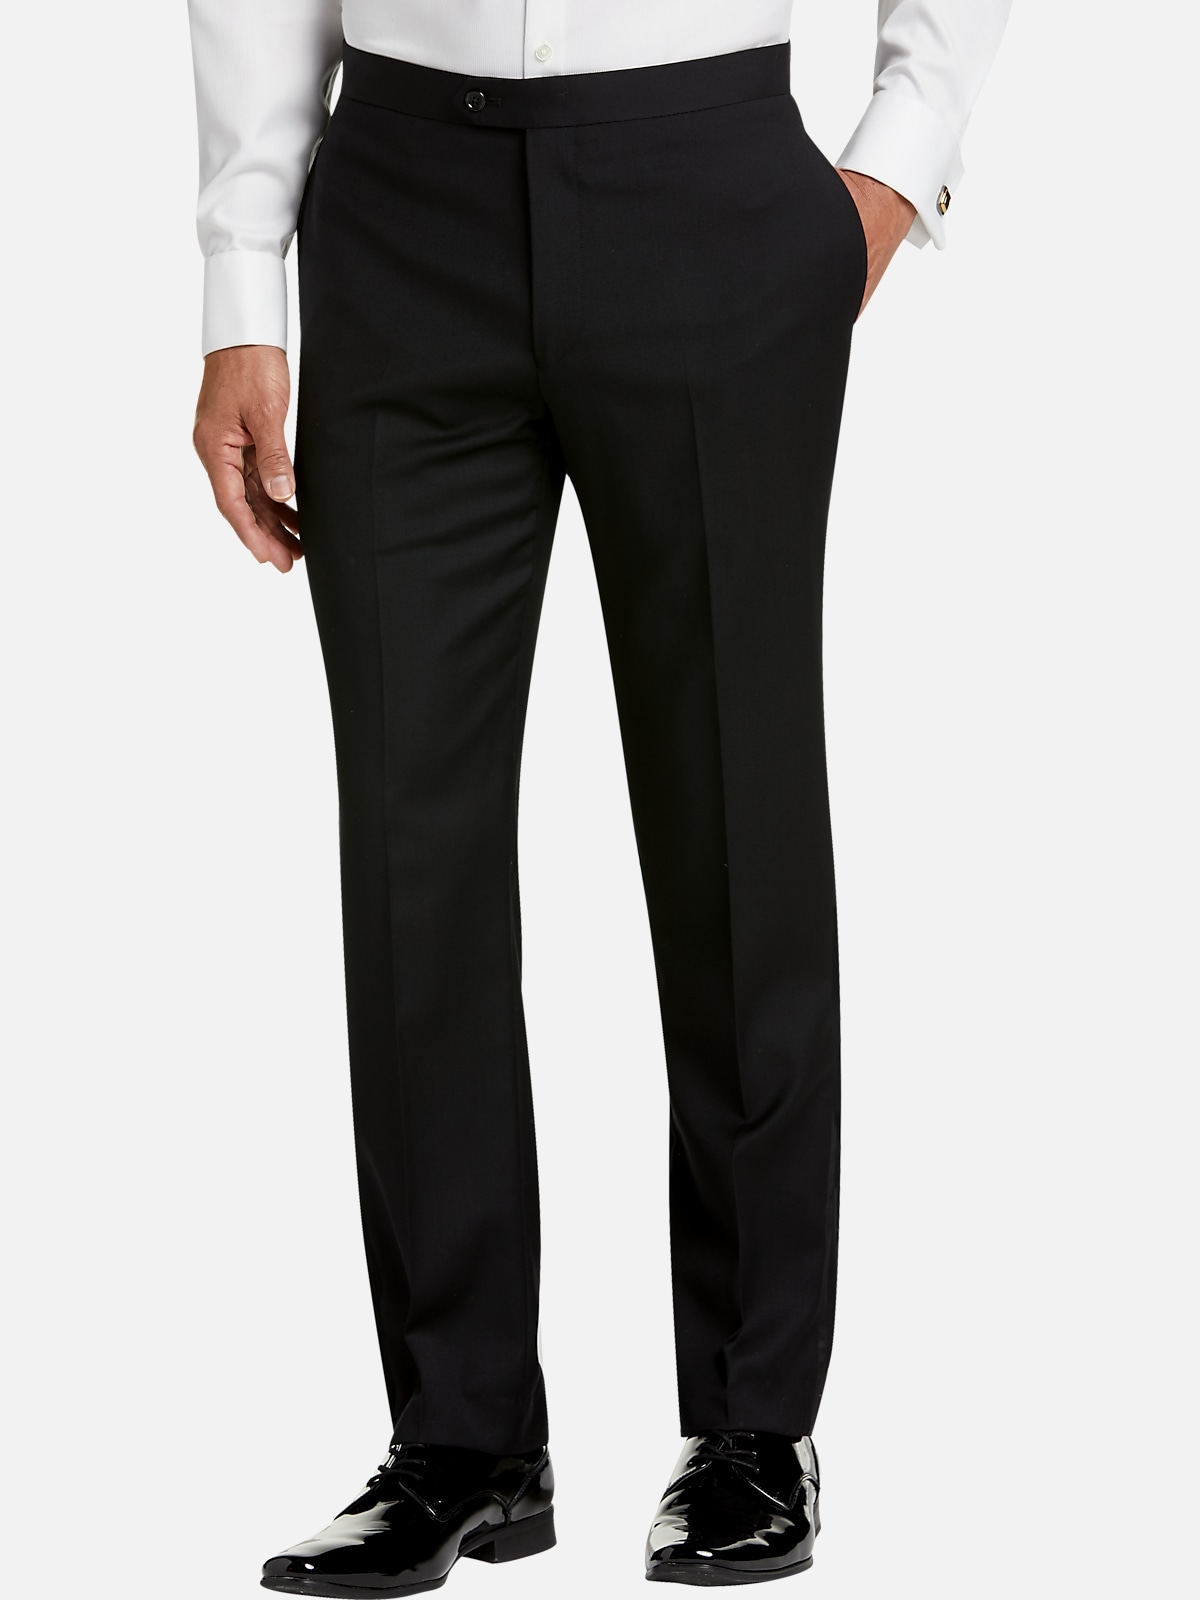 Calvin Klein Jeans , Men's Black Wallet ,Black male, Sizes: One Size